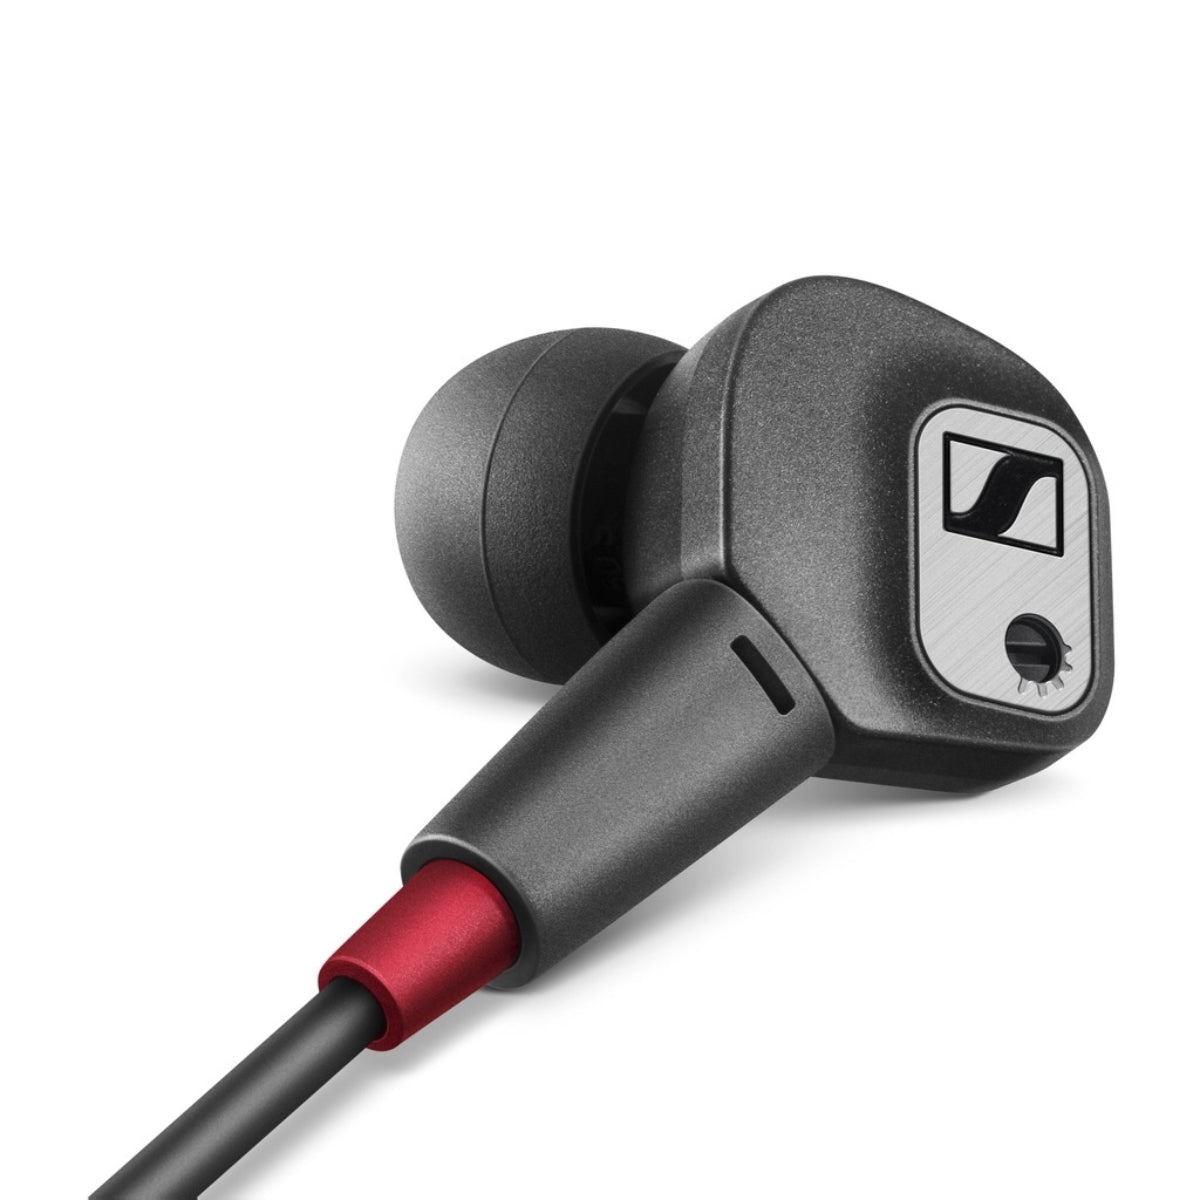 Sennheiser IE 80 S Pro-Inspired In-Ear Headphone, Detachable Cable, 3.5mm Straight Plug